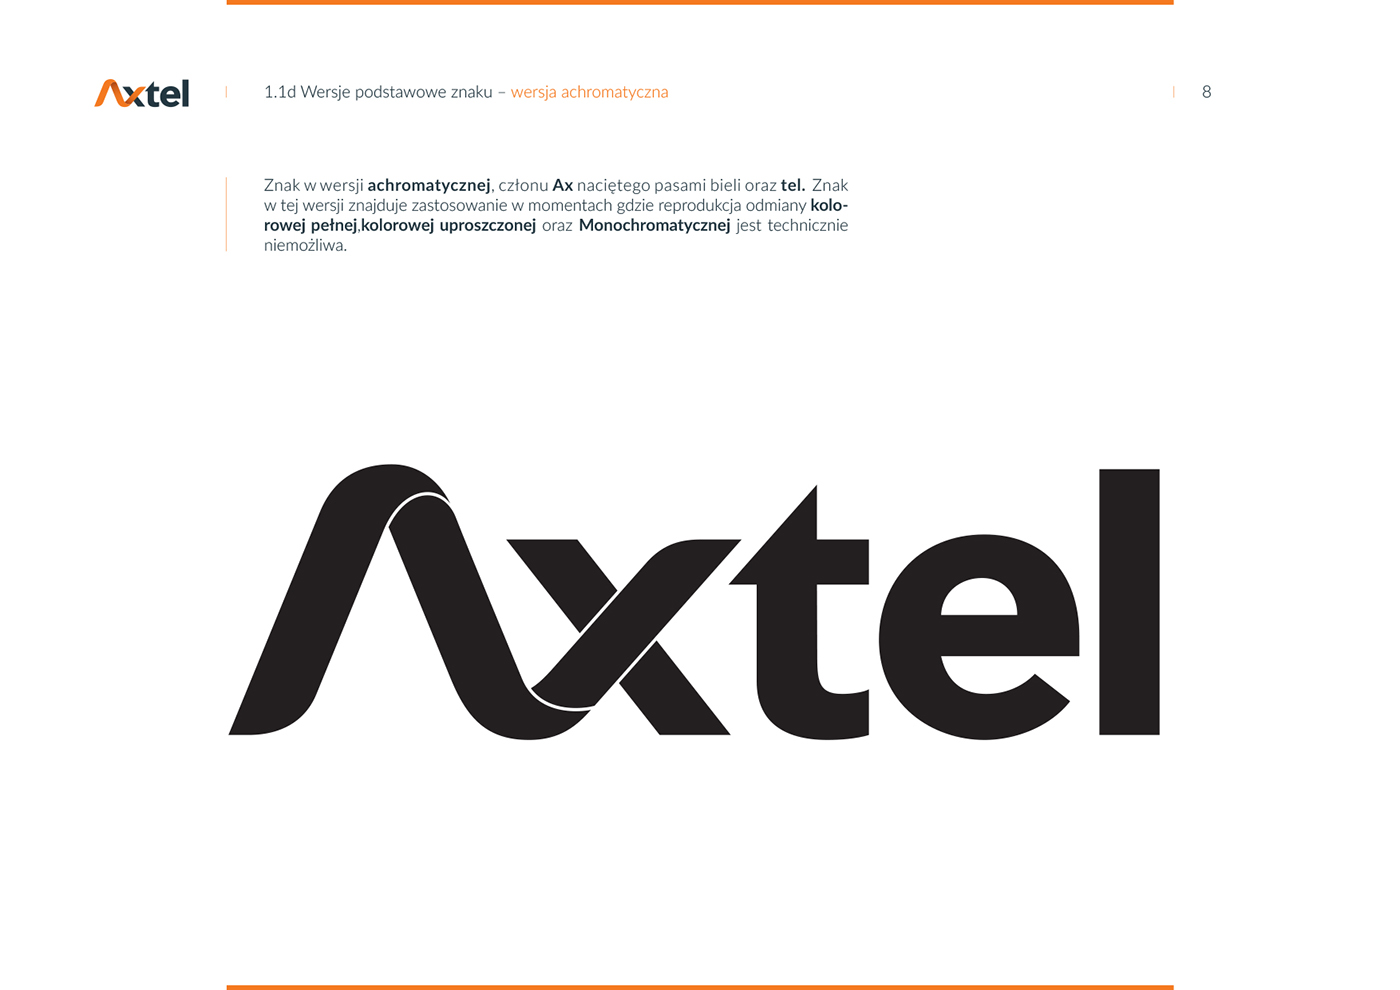 Axtel redesign Logotype borutta orange ligature mateusz MACHALSKI rebranding brandbook type guidelines